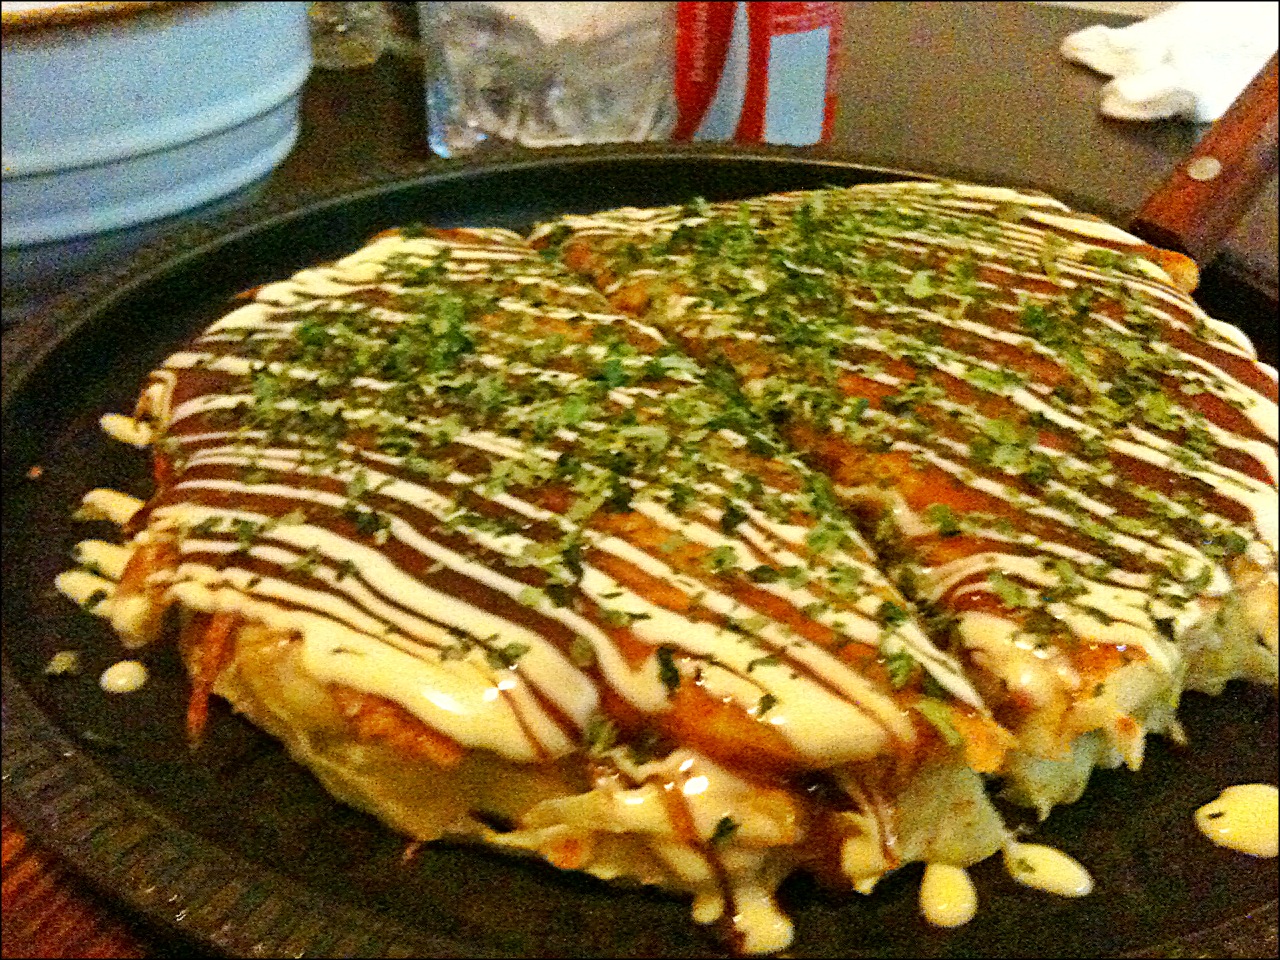 Download this Here The Okonomiyaki Got From Kagura Taken June picture